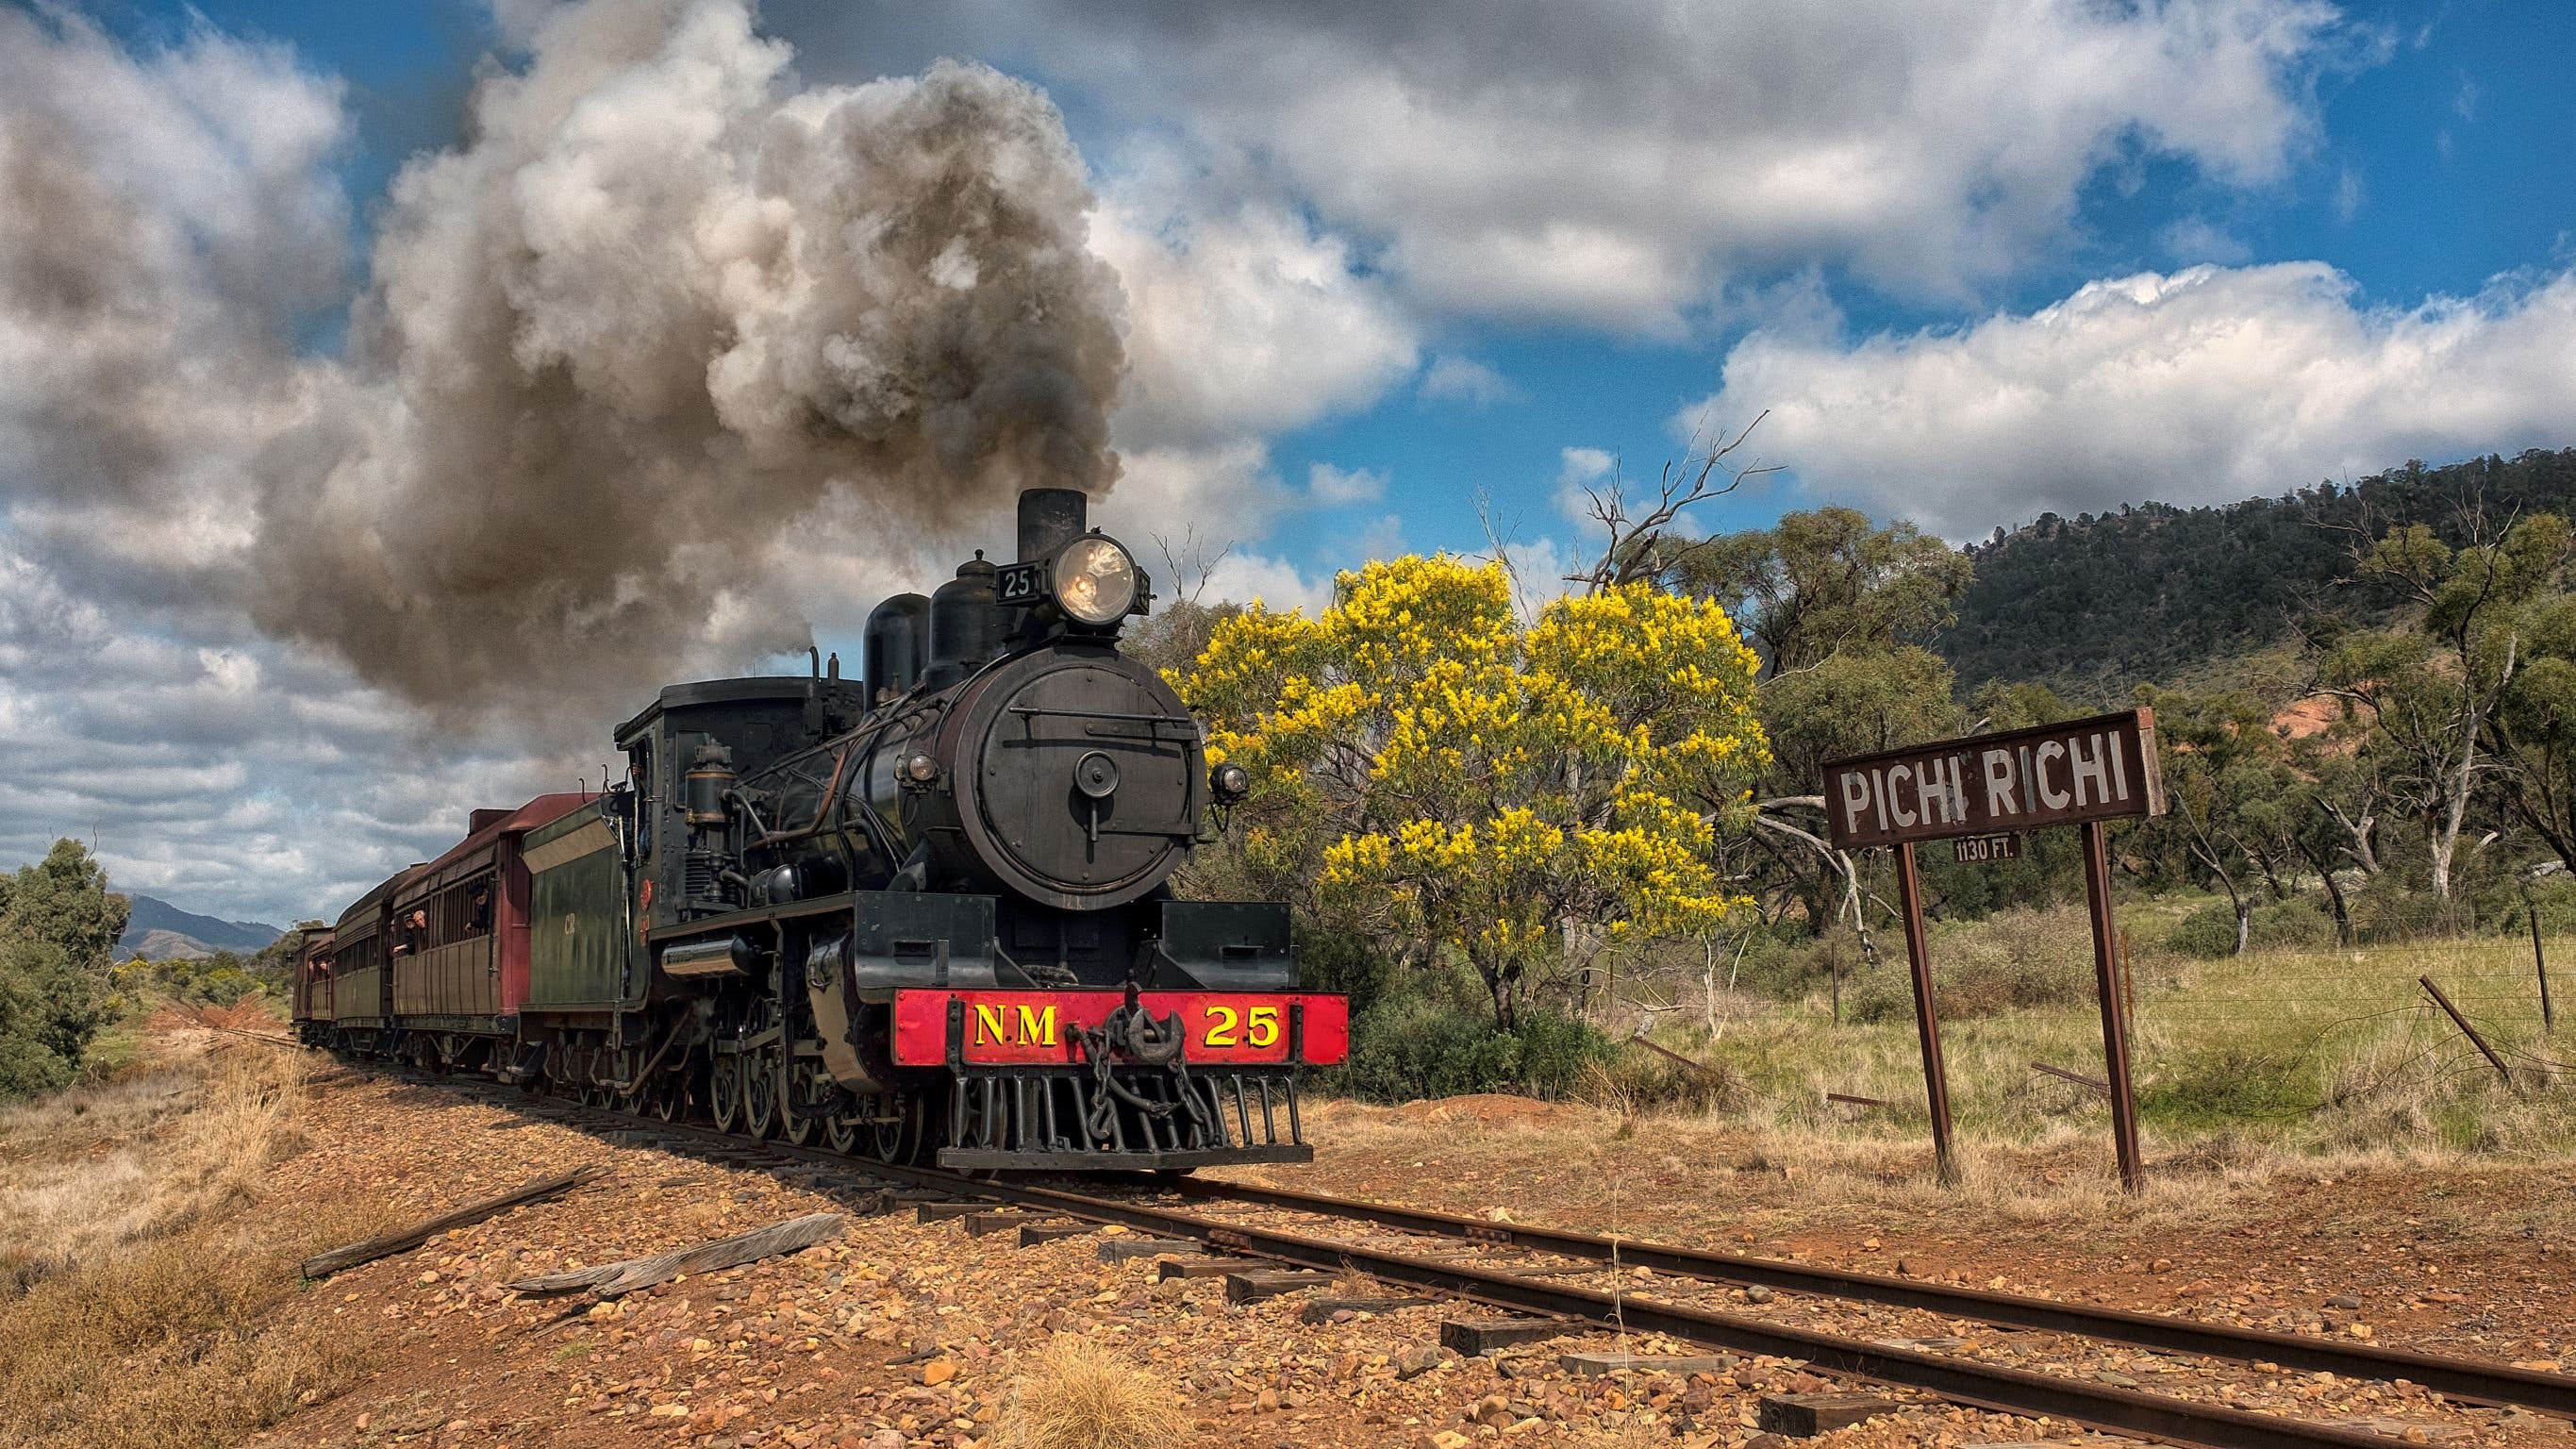 Pichi Richi Railway - Accommodation Adelaide